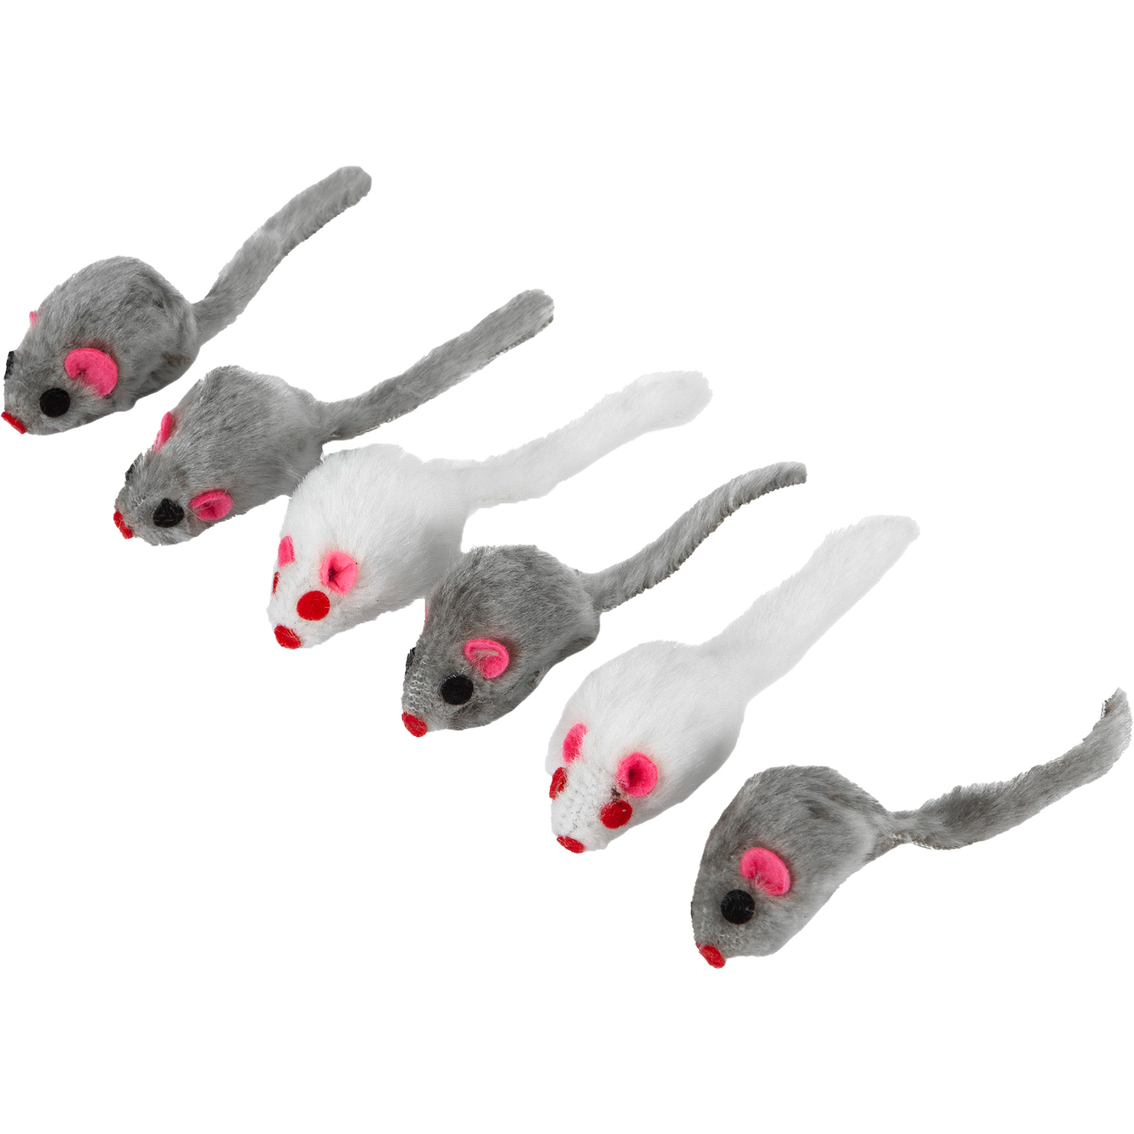 Petmate Fur Catnip Mice Cat Toys 6 Pk., Small | Pet Toys | Household ...